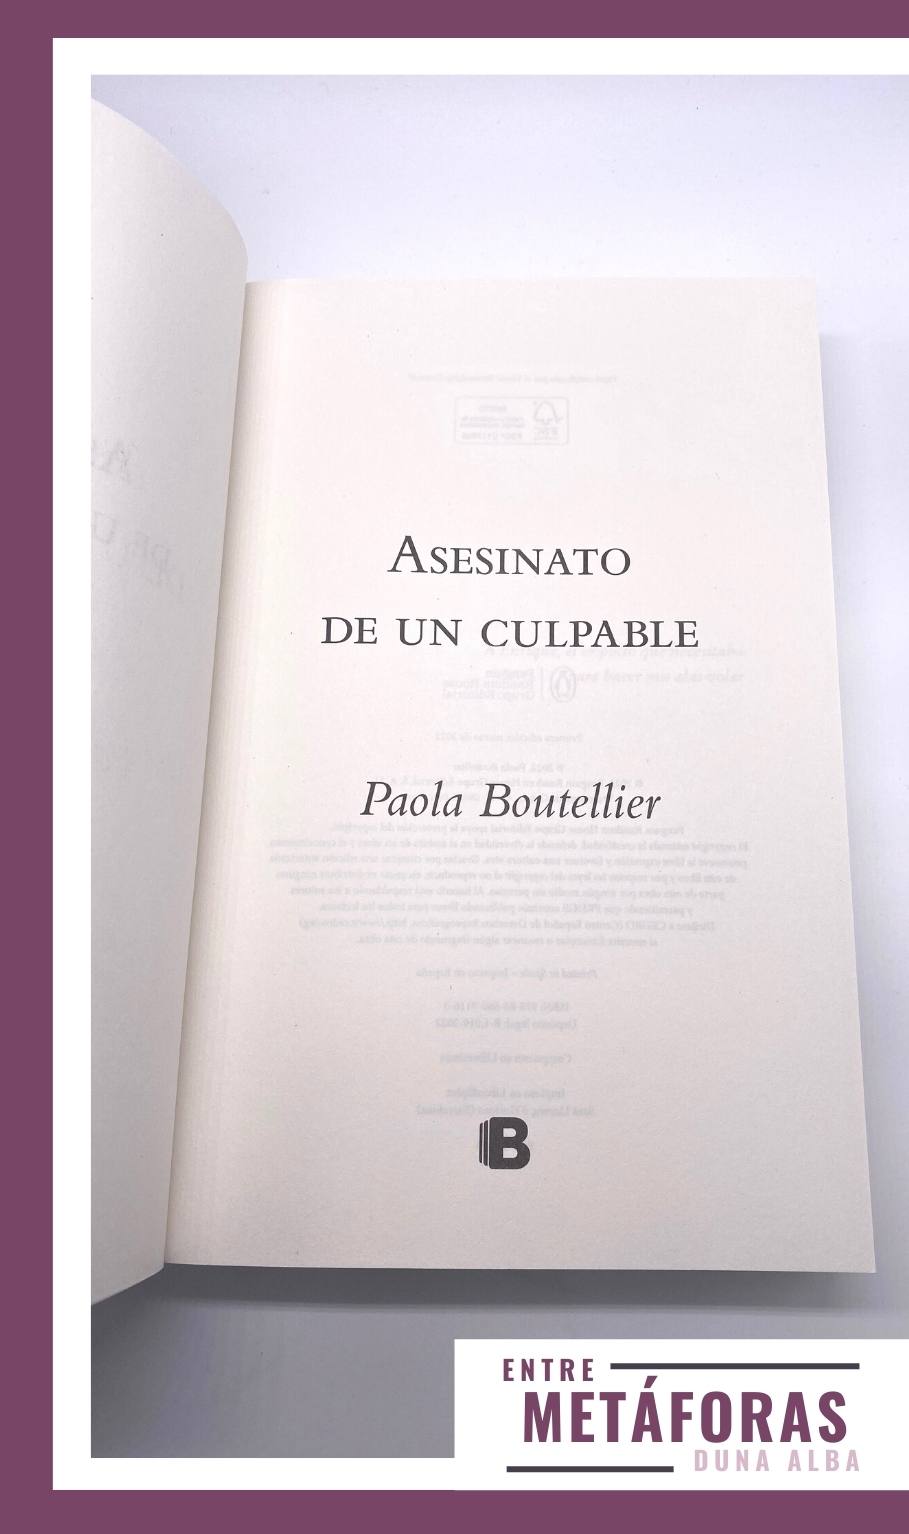 Asesinato de un culpable, de Paola Boutellier